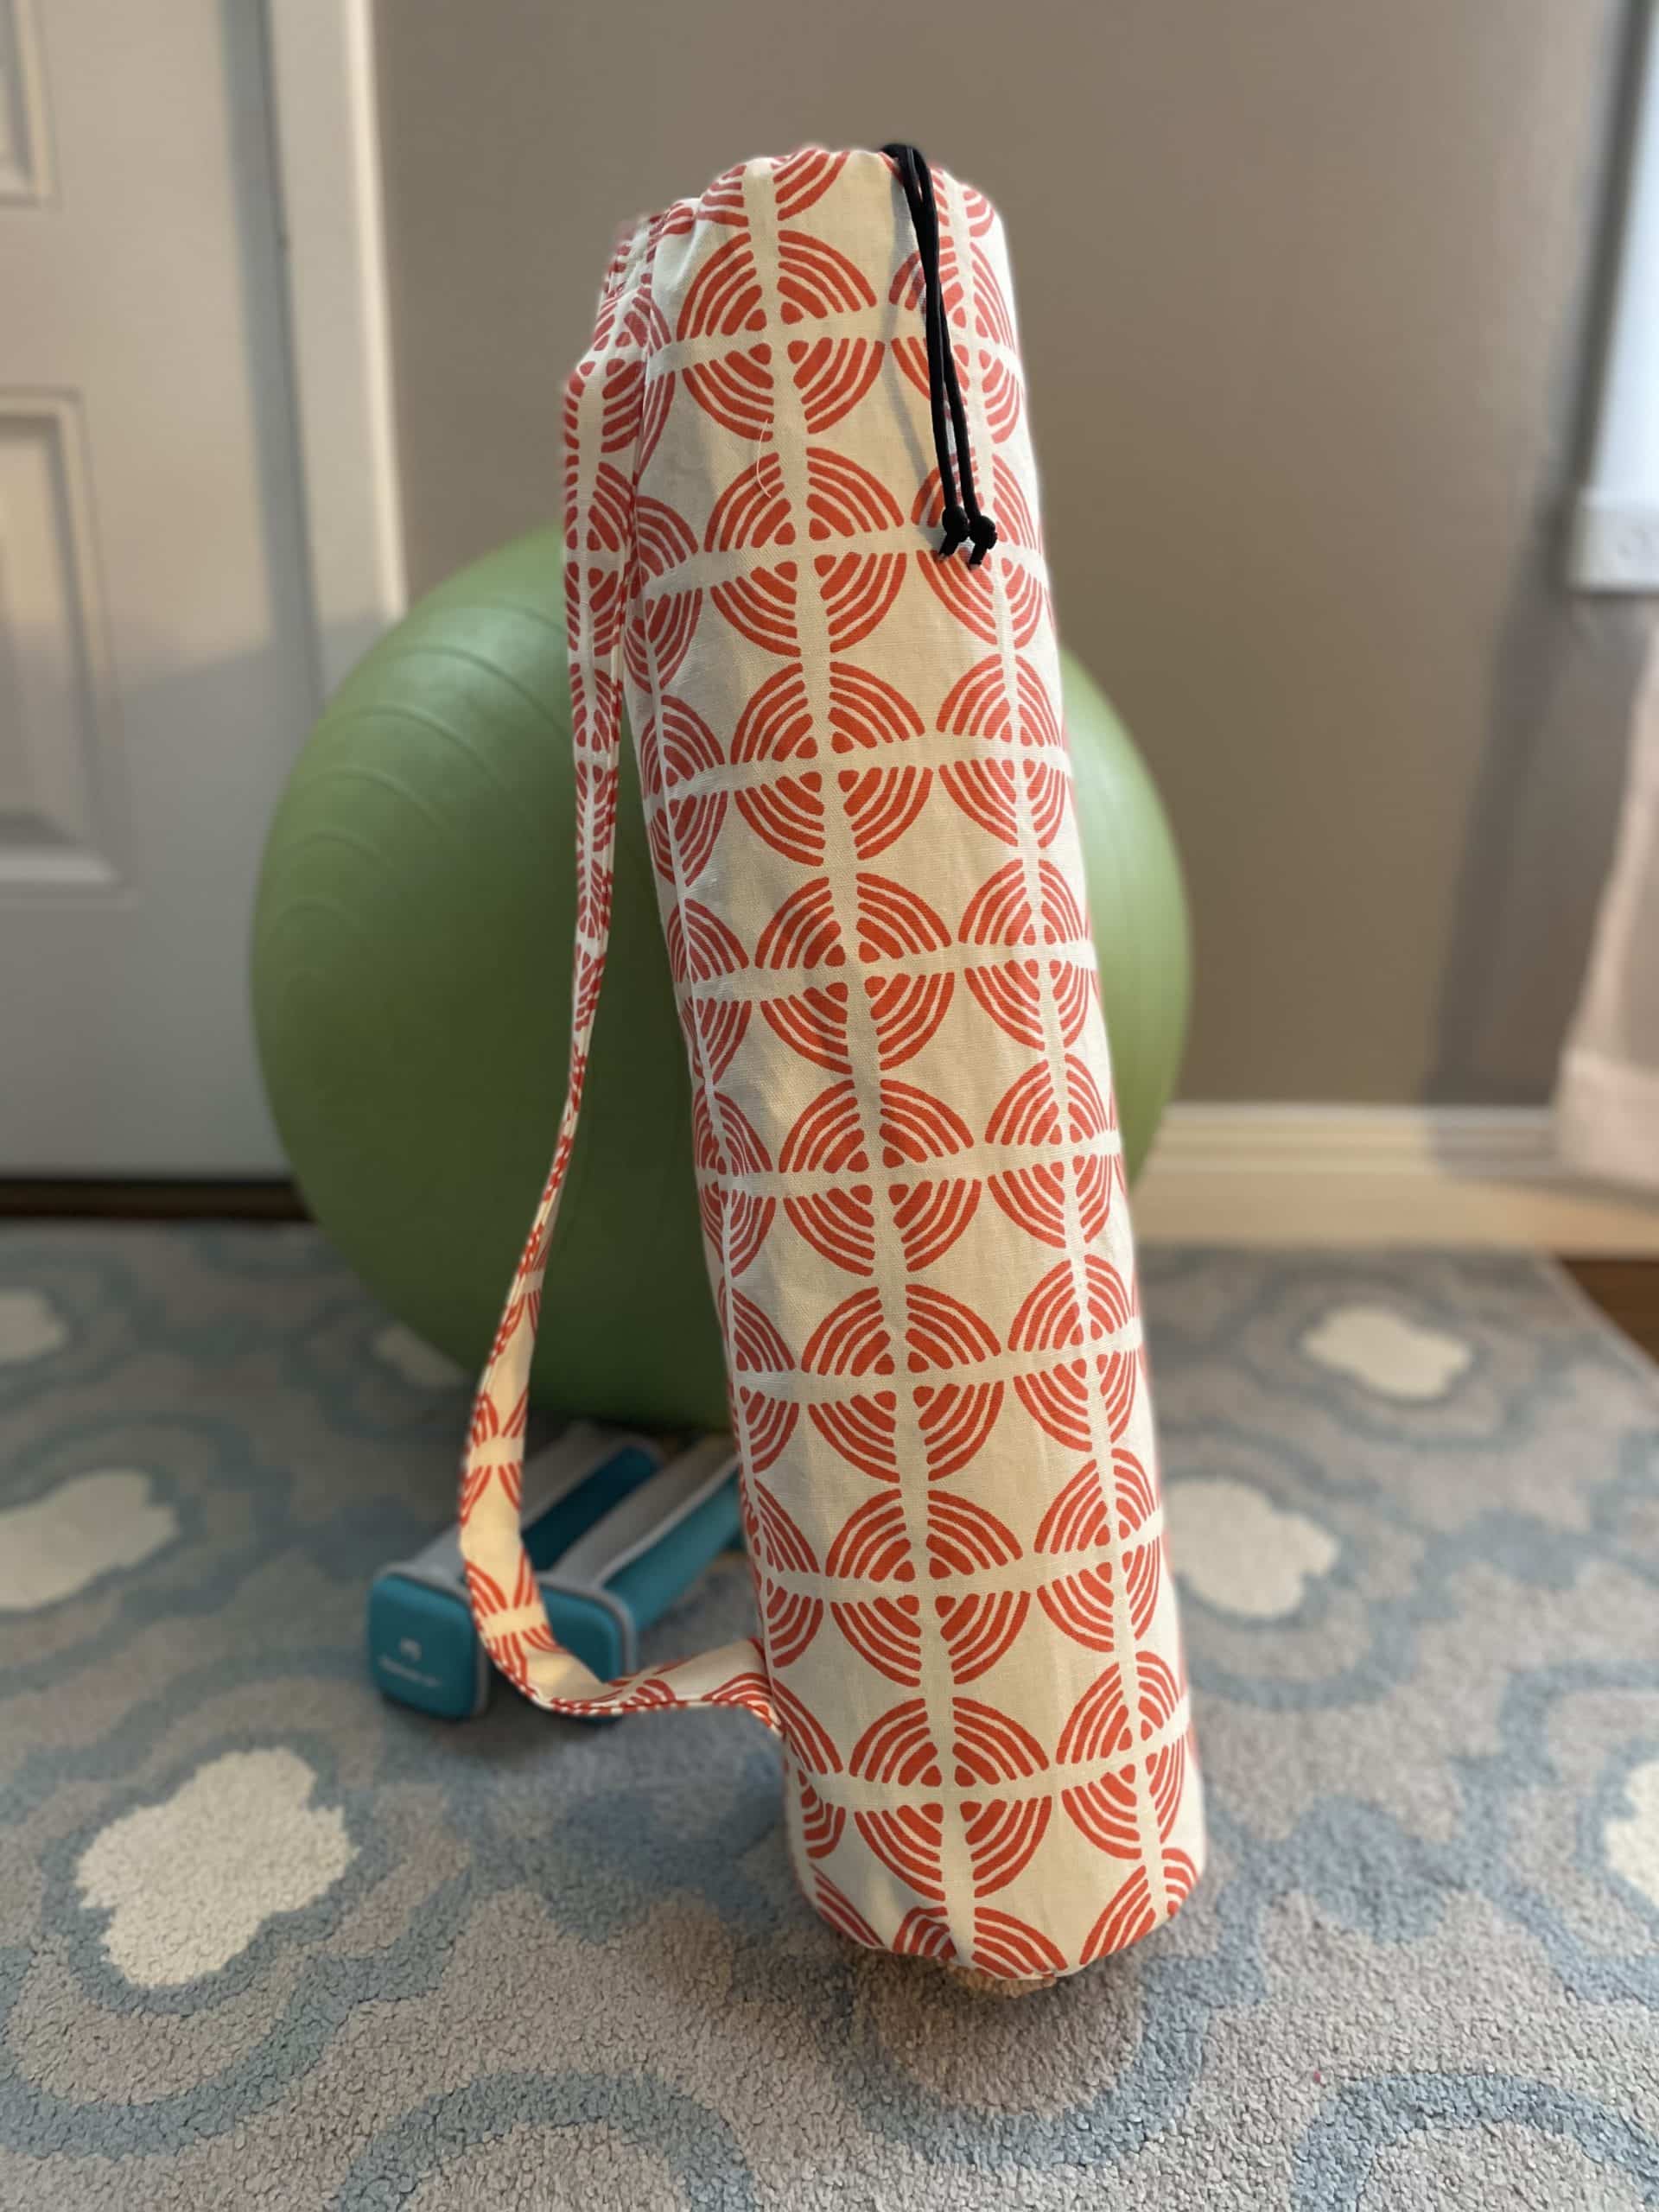 and away we go!: a DIY yoga mat strap